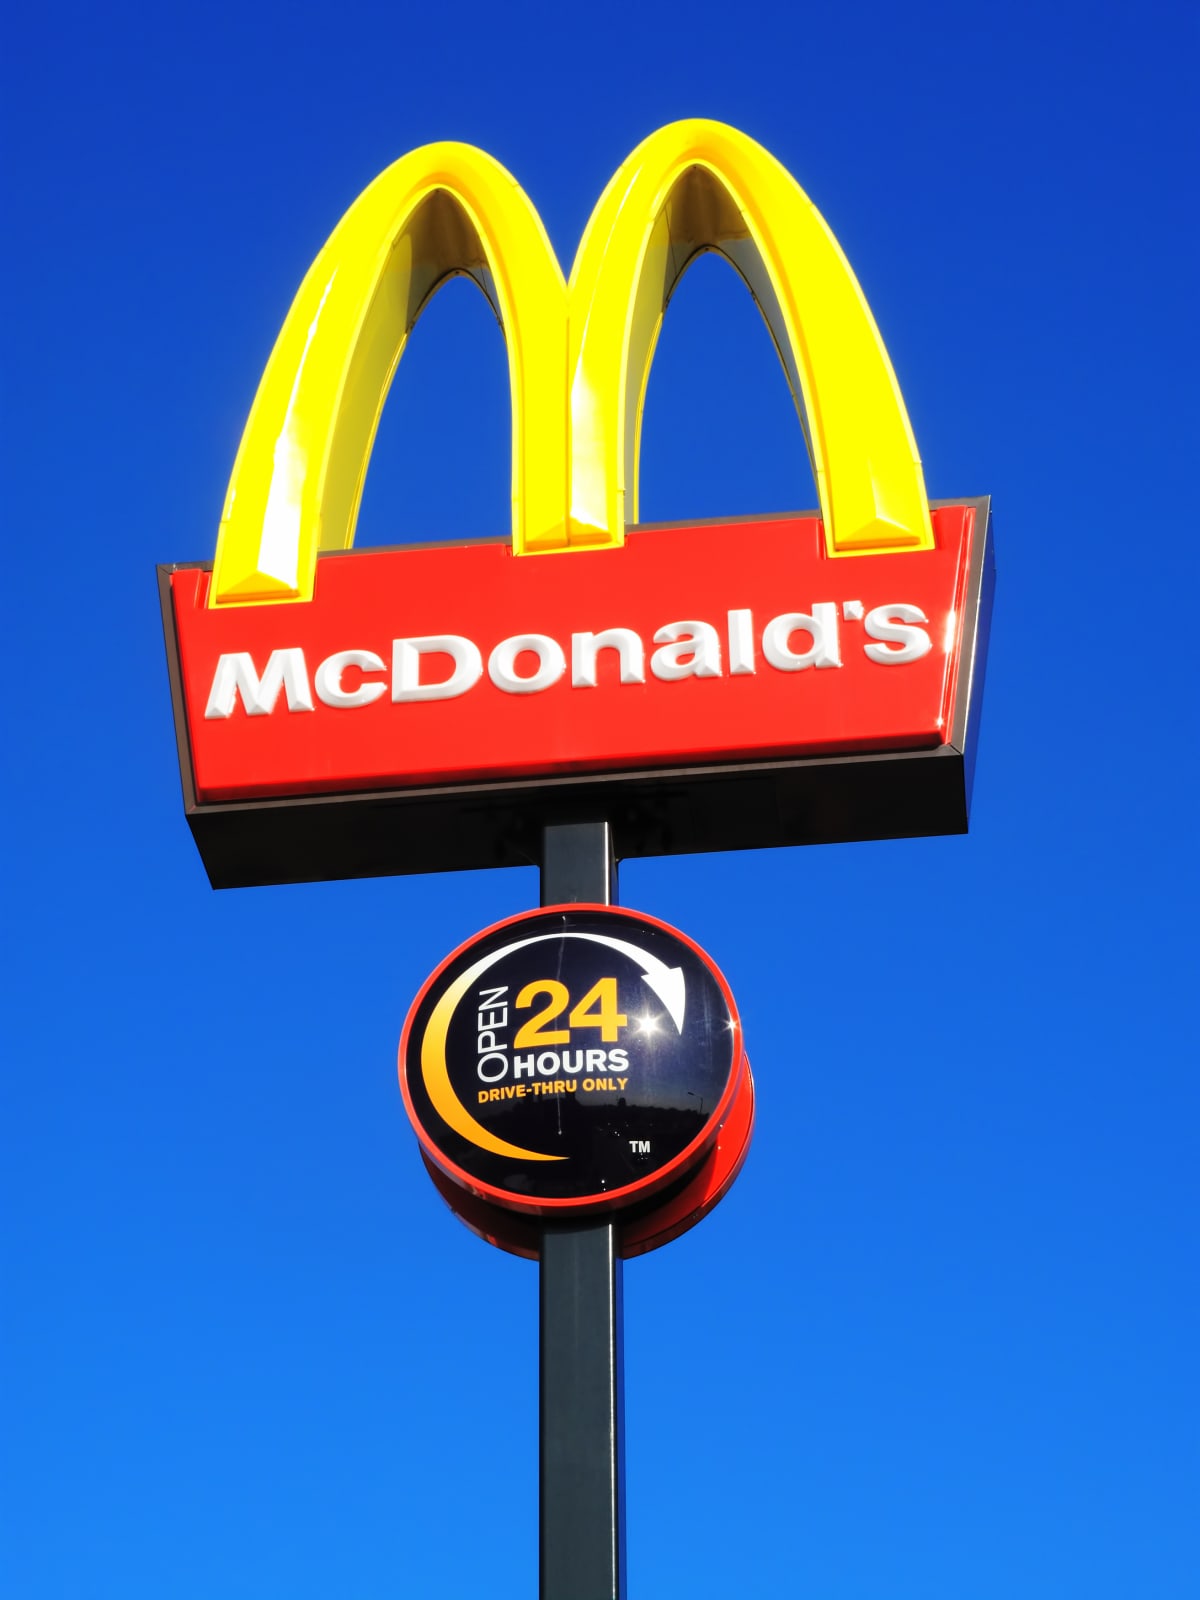 A McDonald's sign against a blue sky.